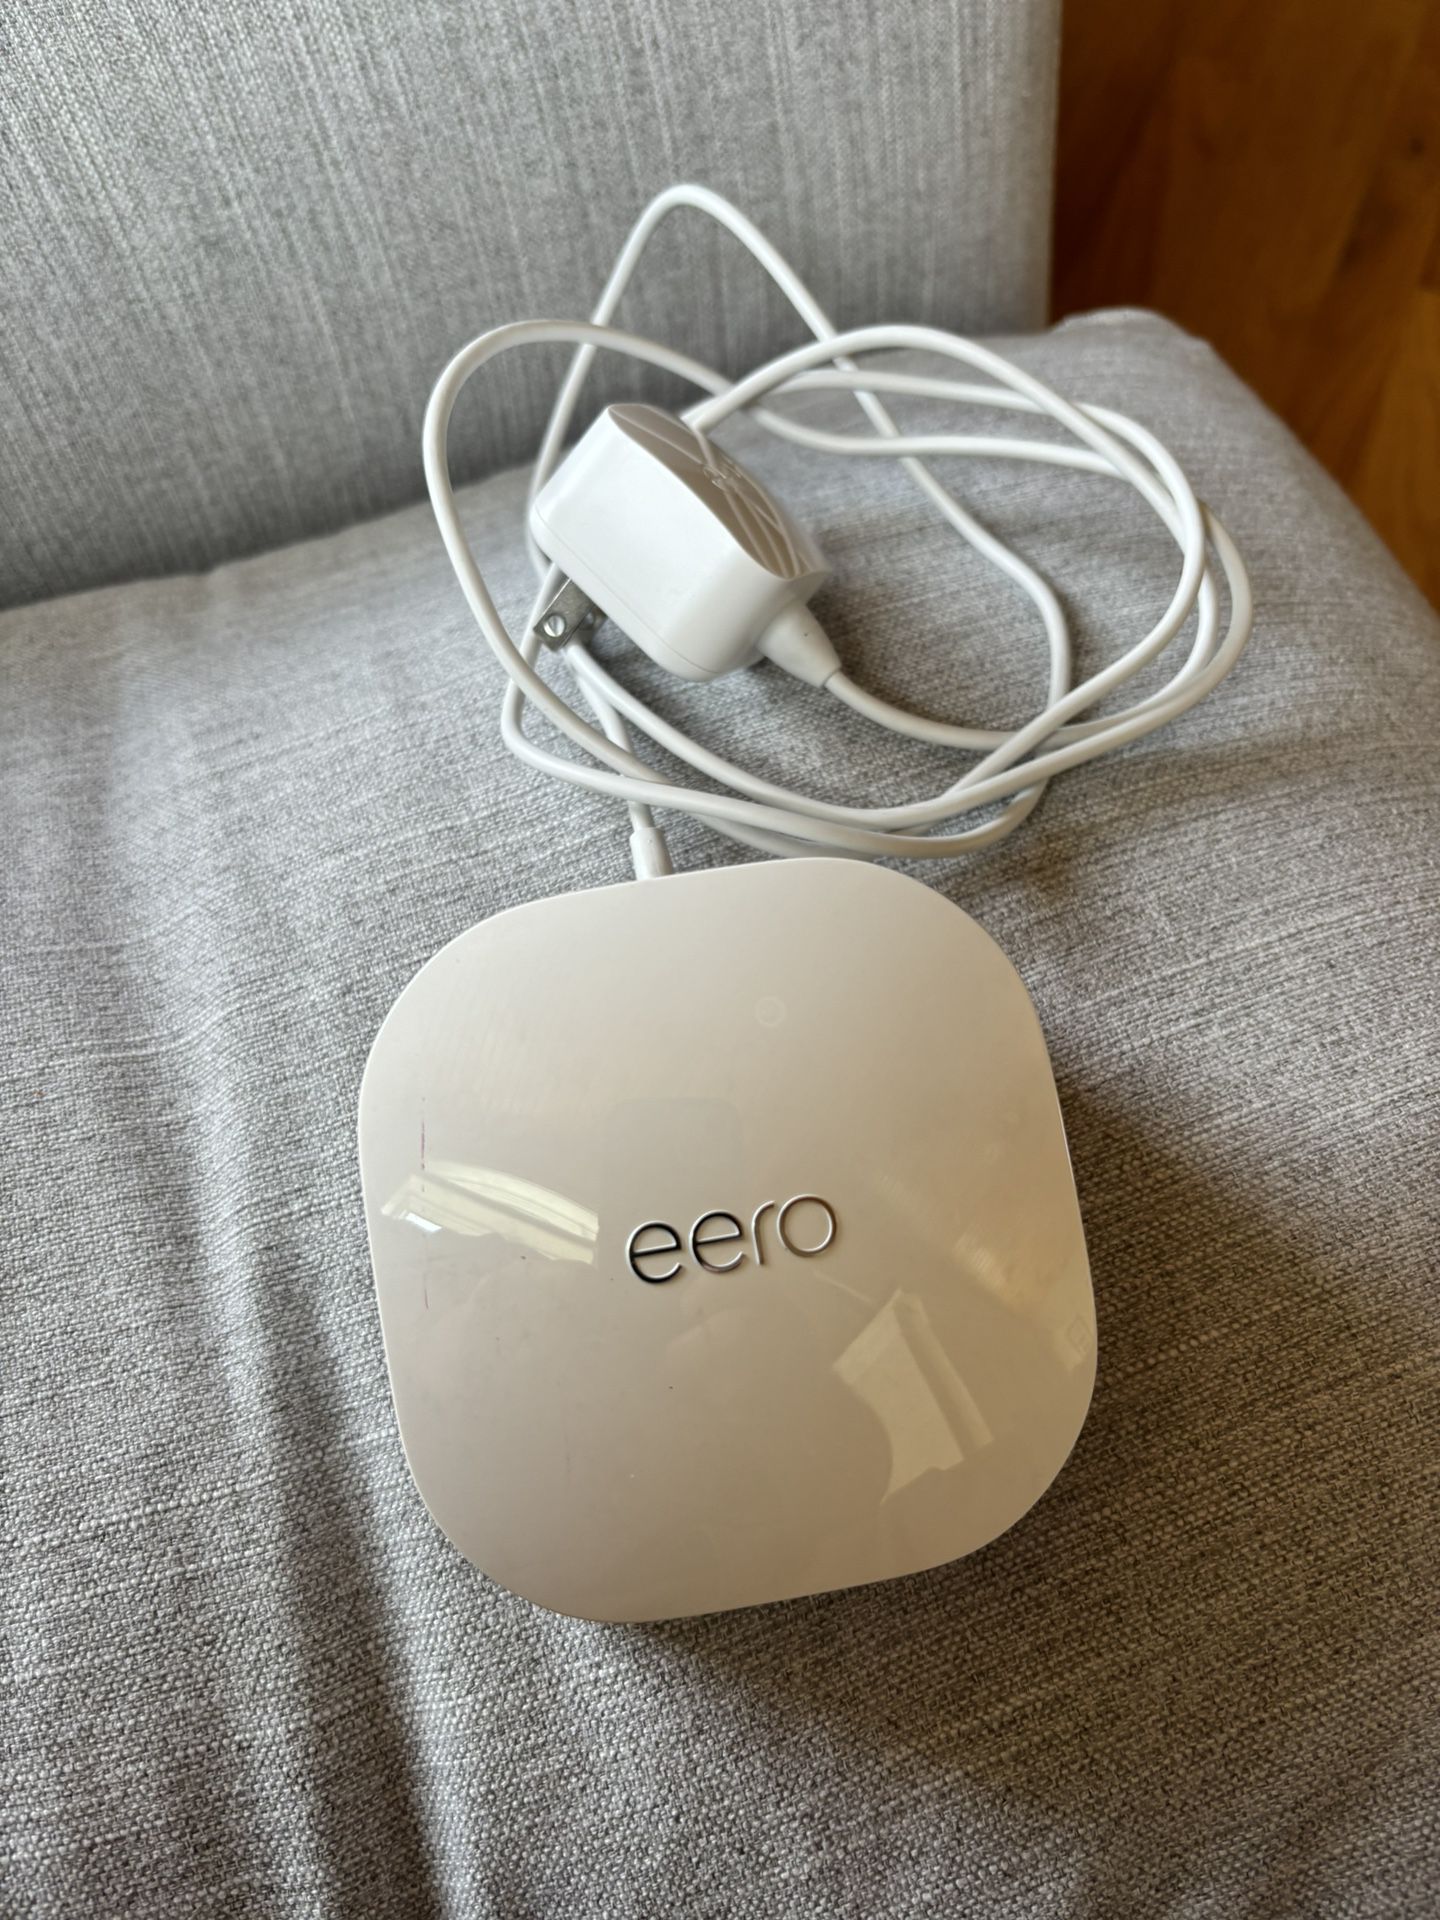 Eero 6 Mesh WiFi Add on Extender